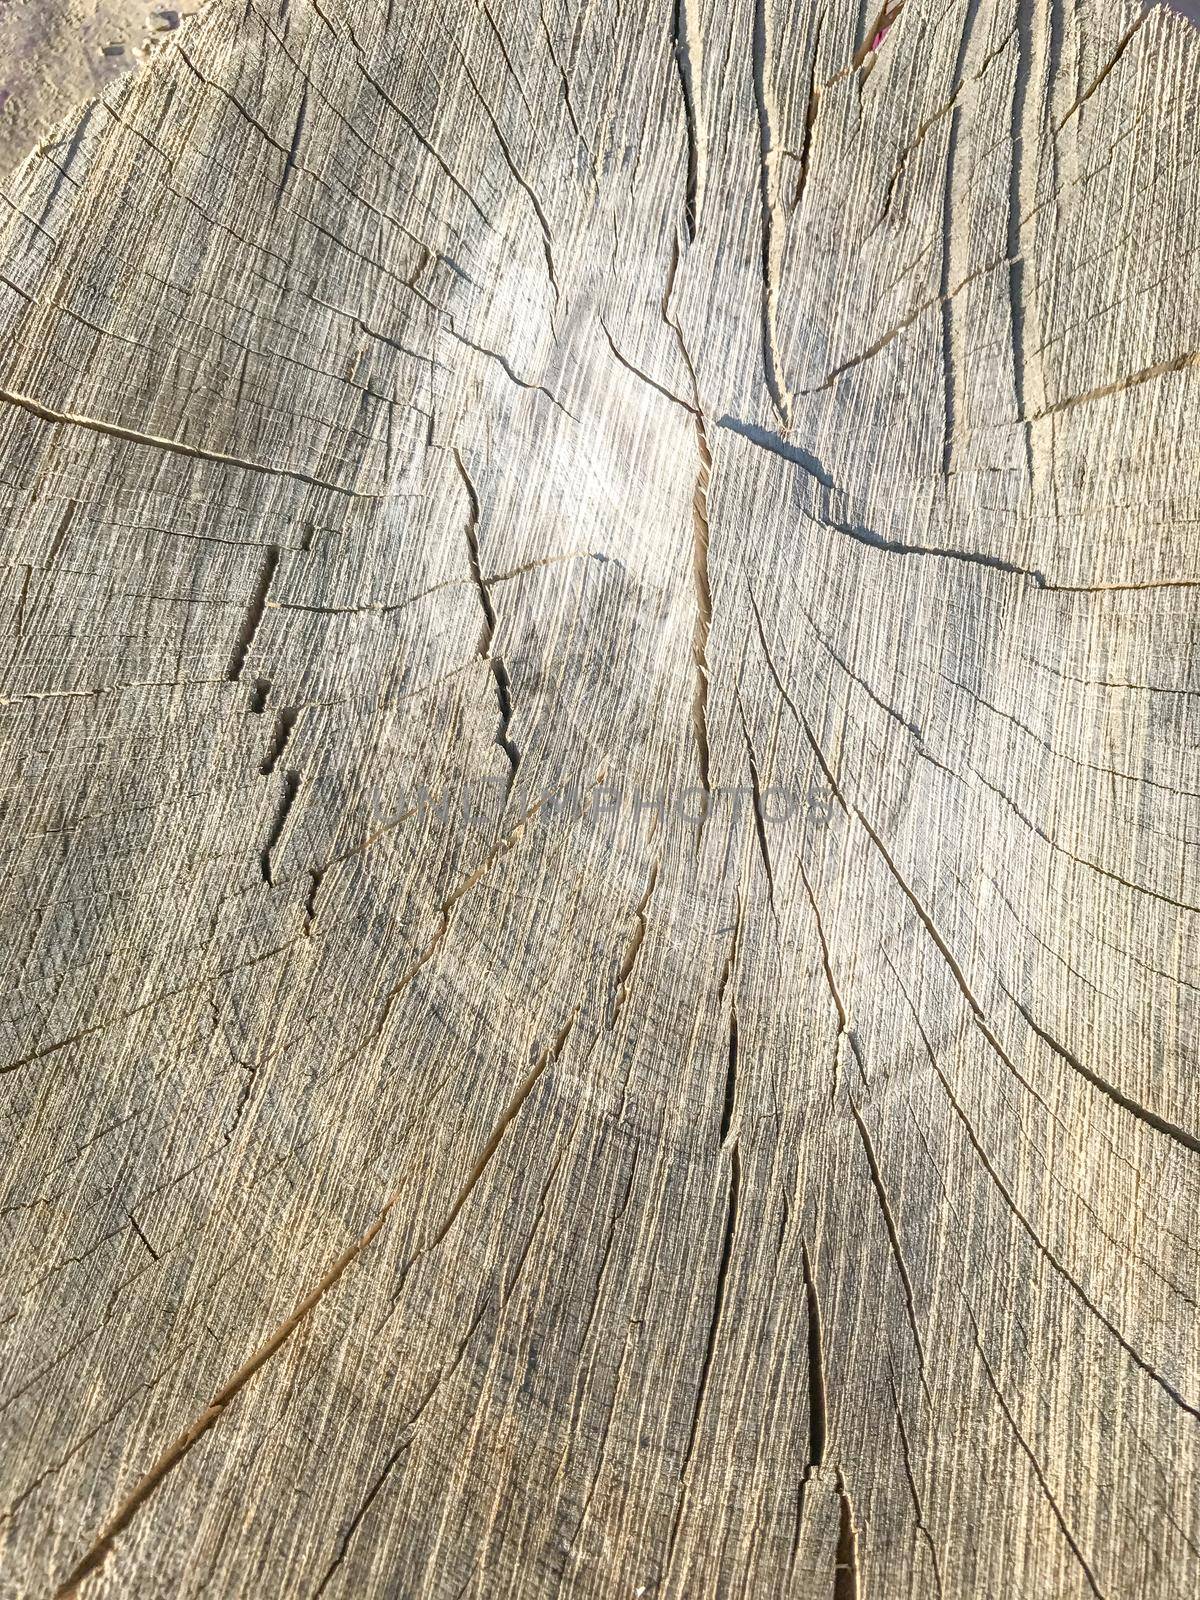 wood cut texture by Mariakray